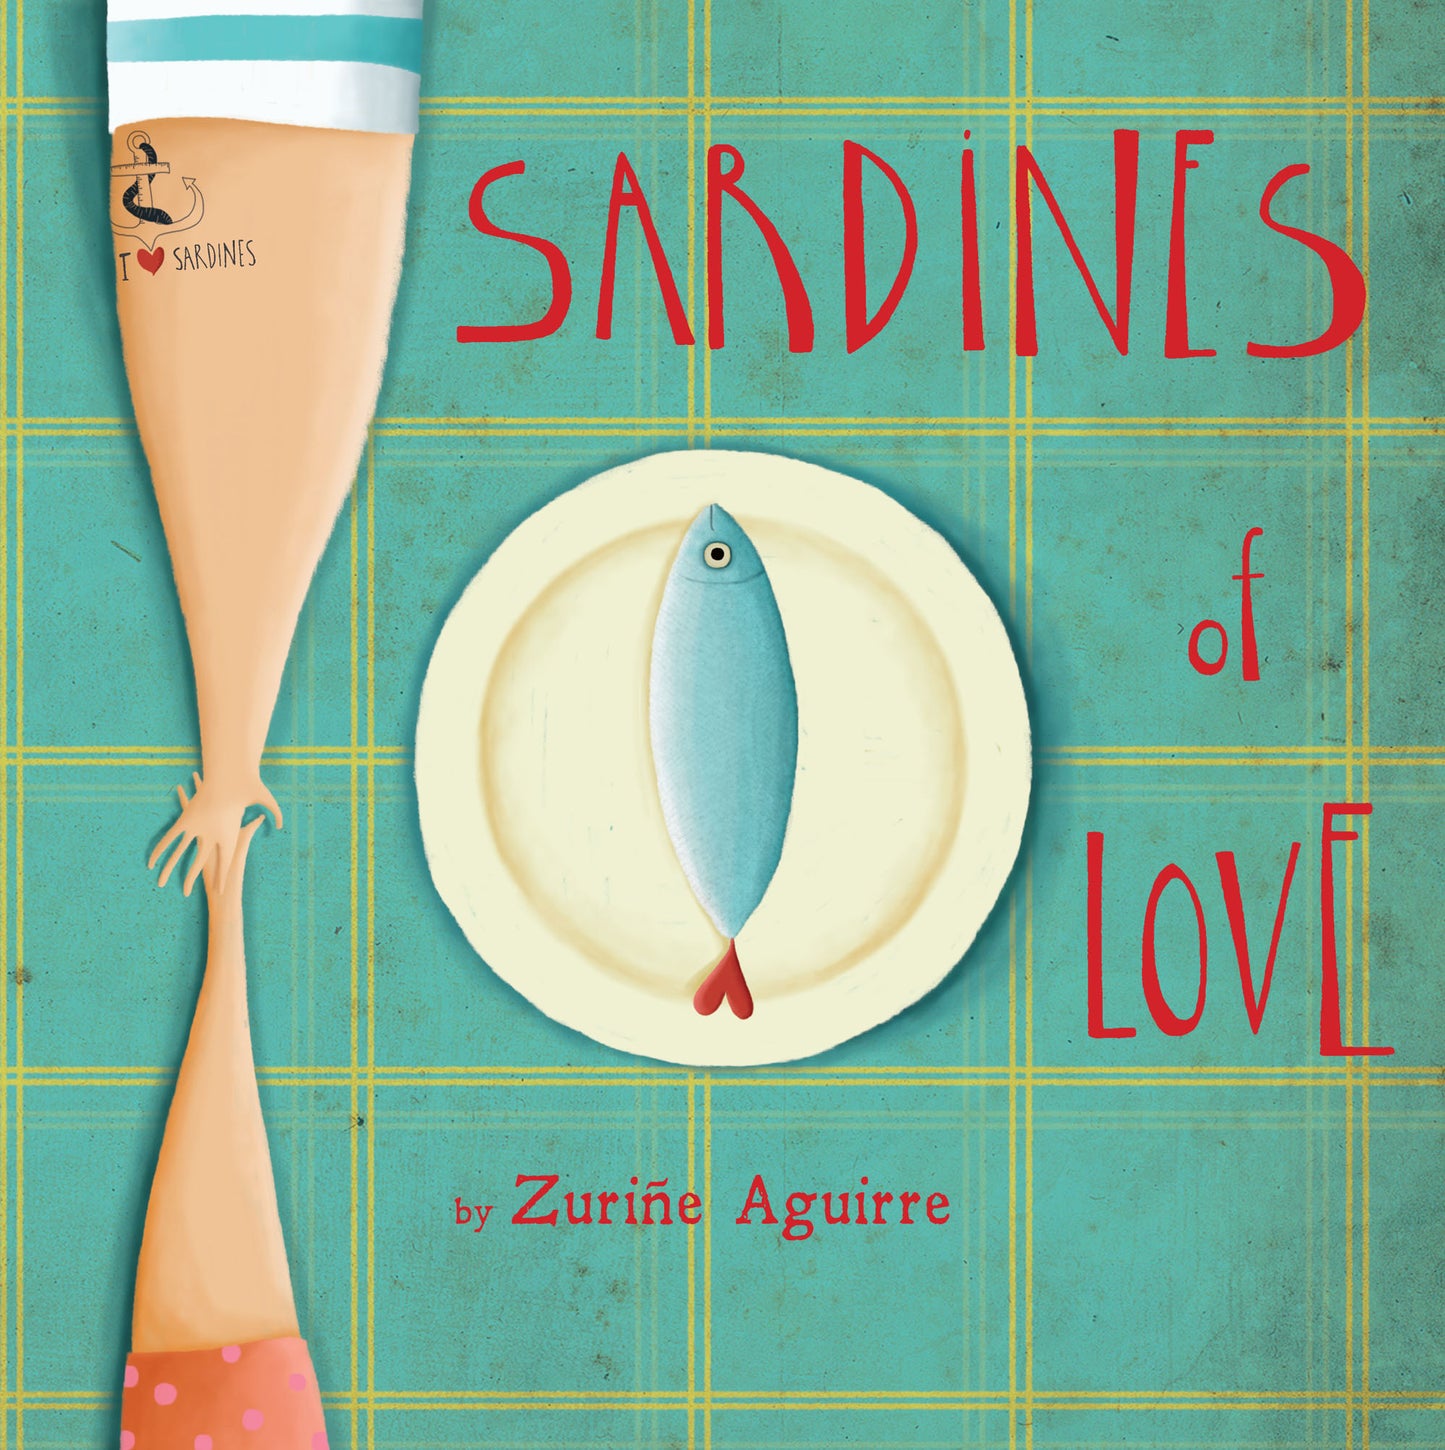 Sardines of Love (Hardcover Edition)